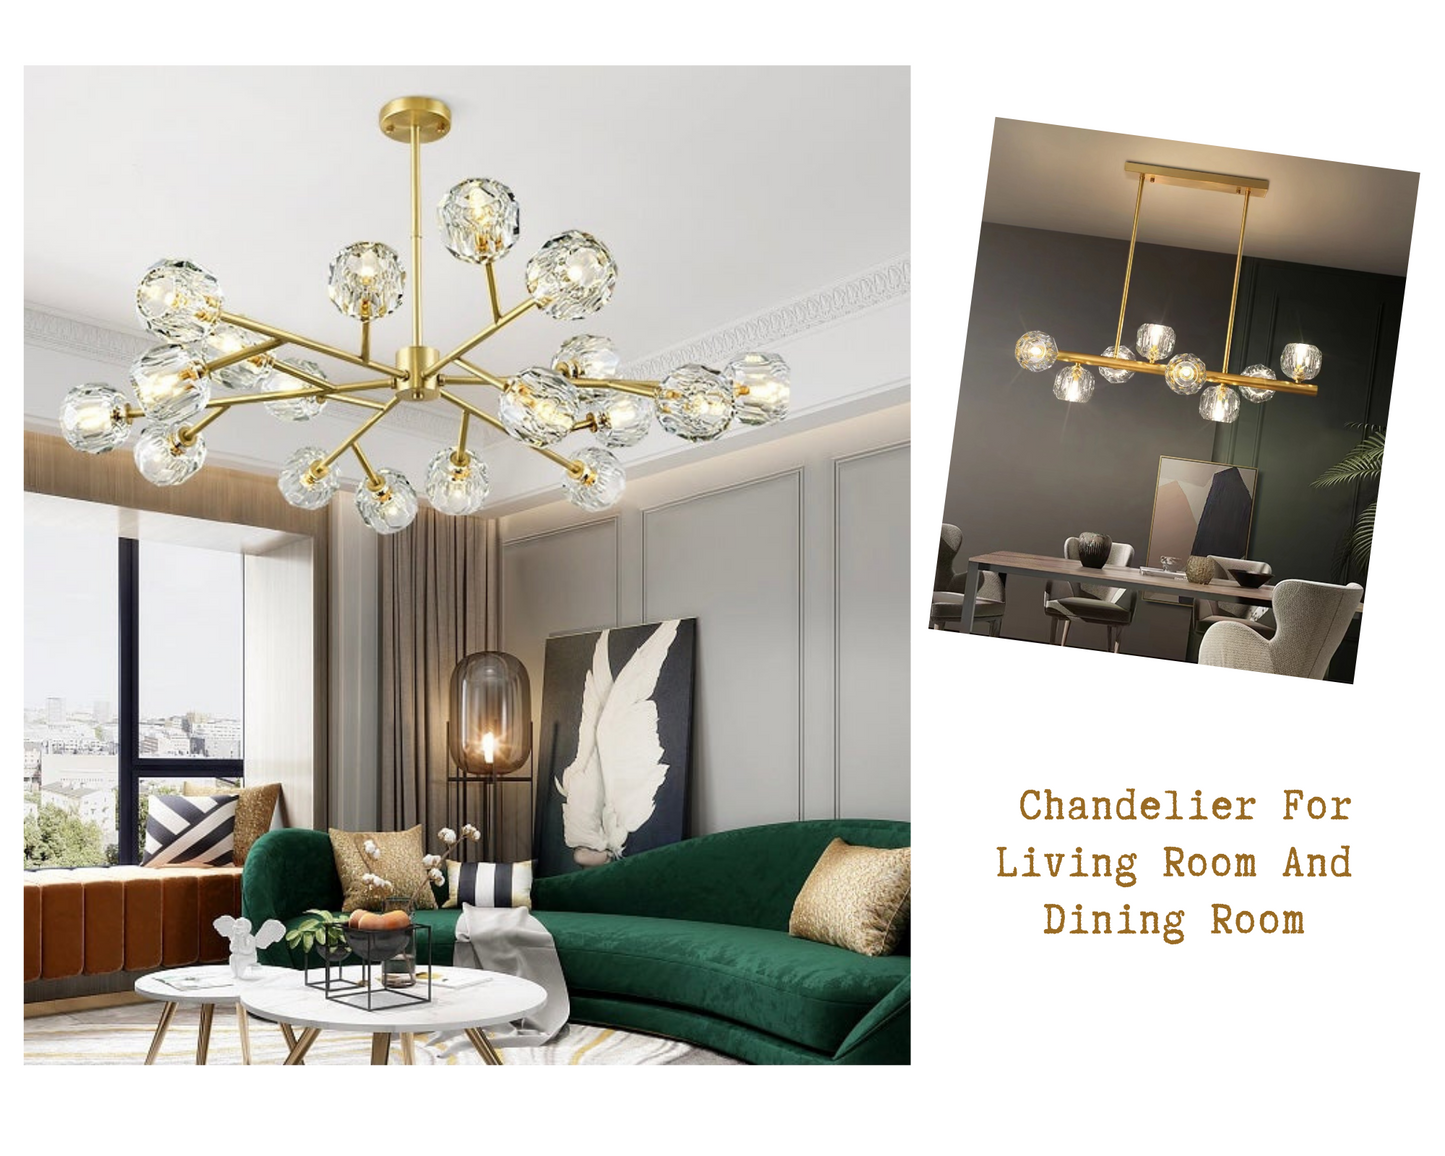 Brass Sputnik Chandelier With K9 Crystals Modern Ceiling Light Fixture